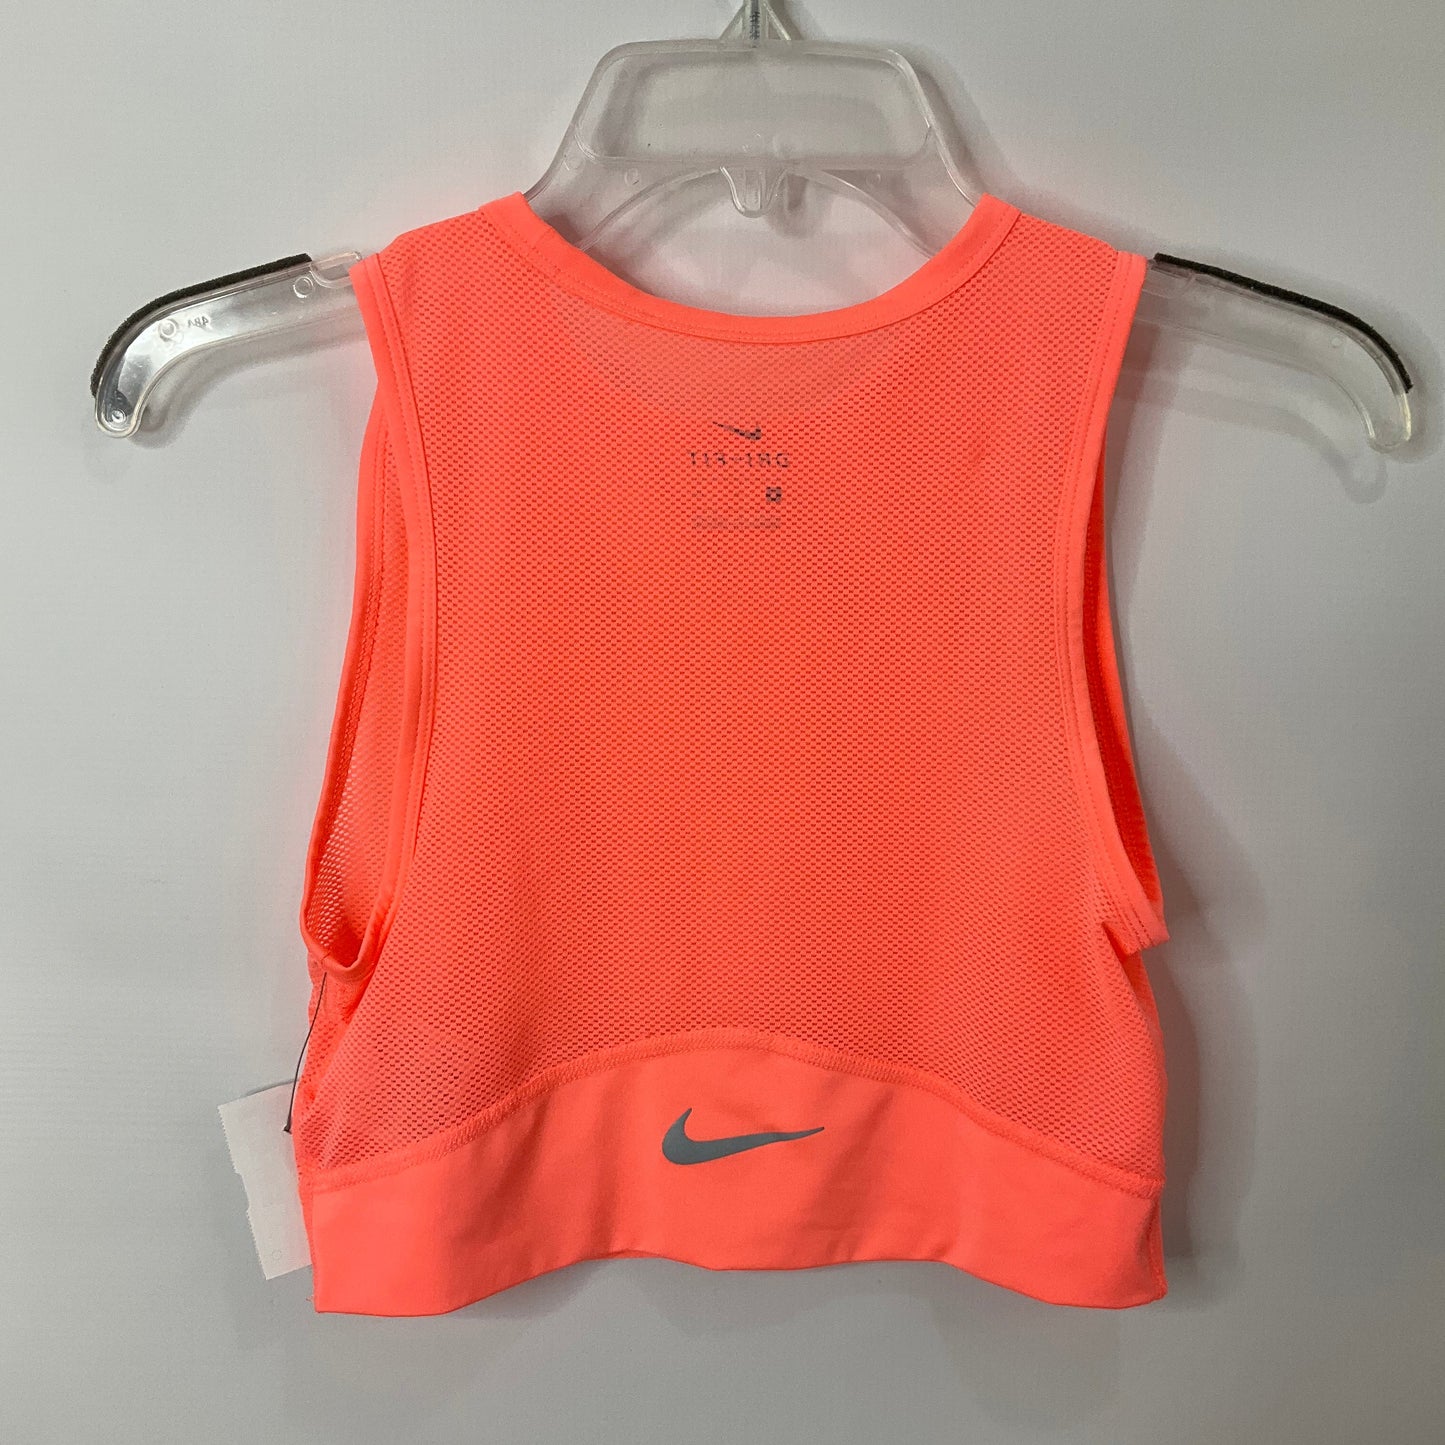 Orange Athletic Tank Top Nike Apparel, Size S